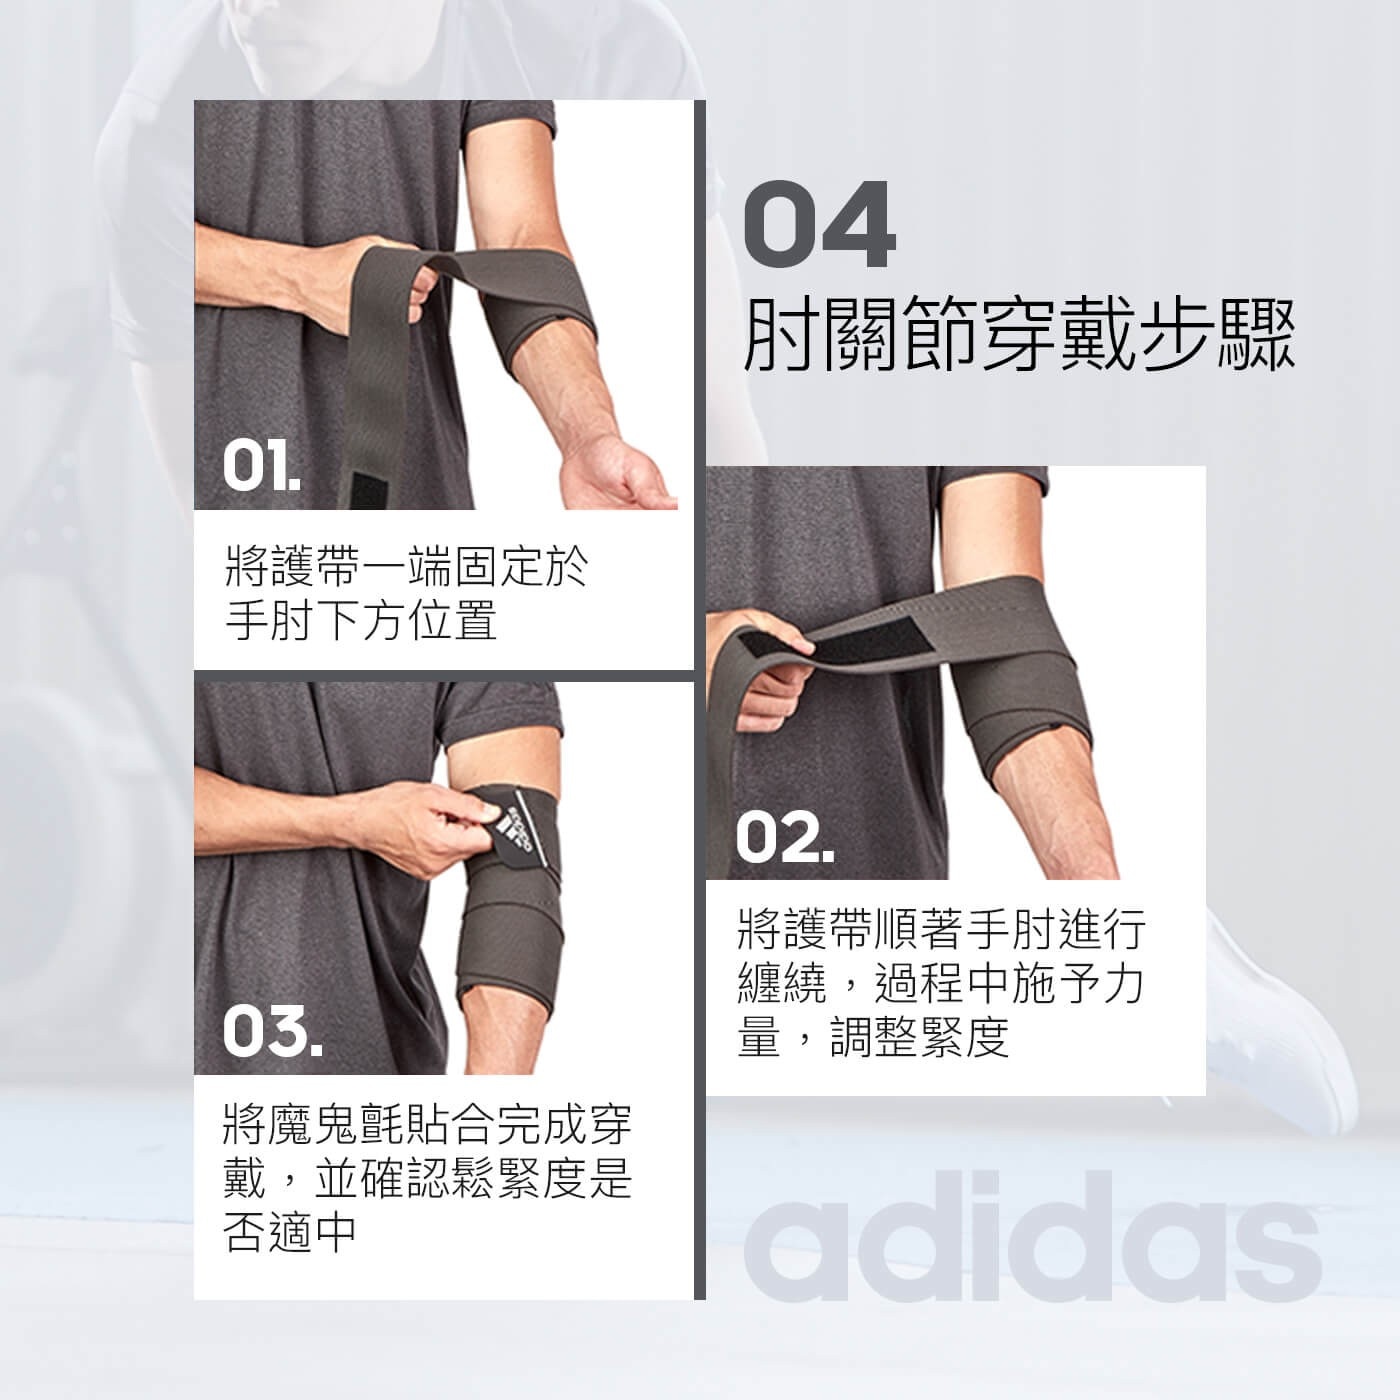 Adidas 彈力纏繞式訓練護帶肘關節穿戴步驟